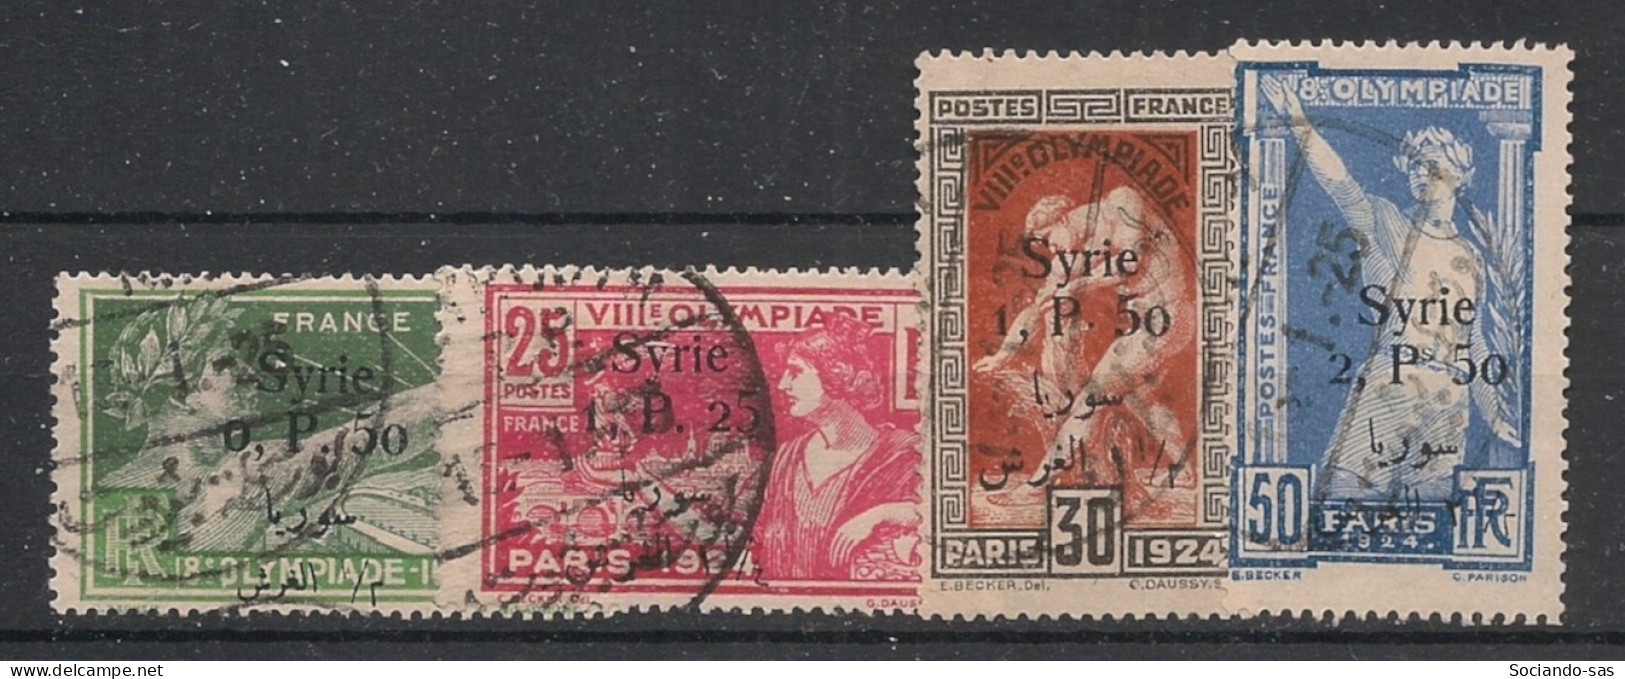 SYRIE - 1924 - N°YT. 149 à 152 - Olympics - Série Complète - Oblitéré / Used - Gebruikt